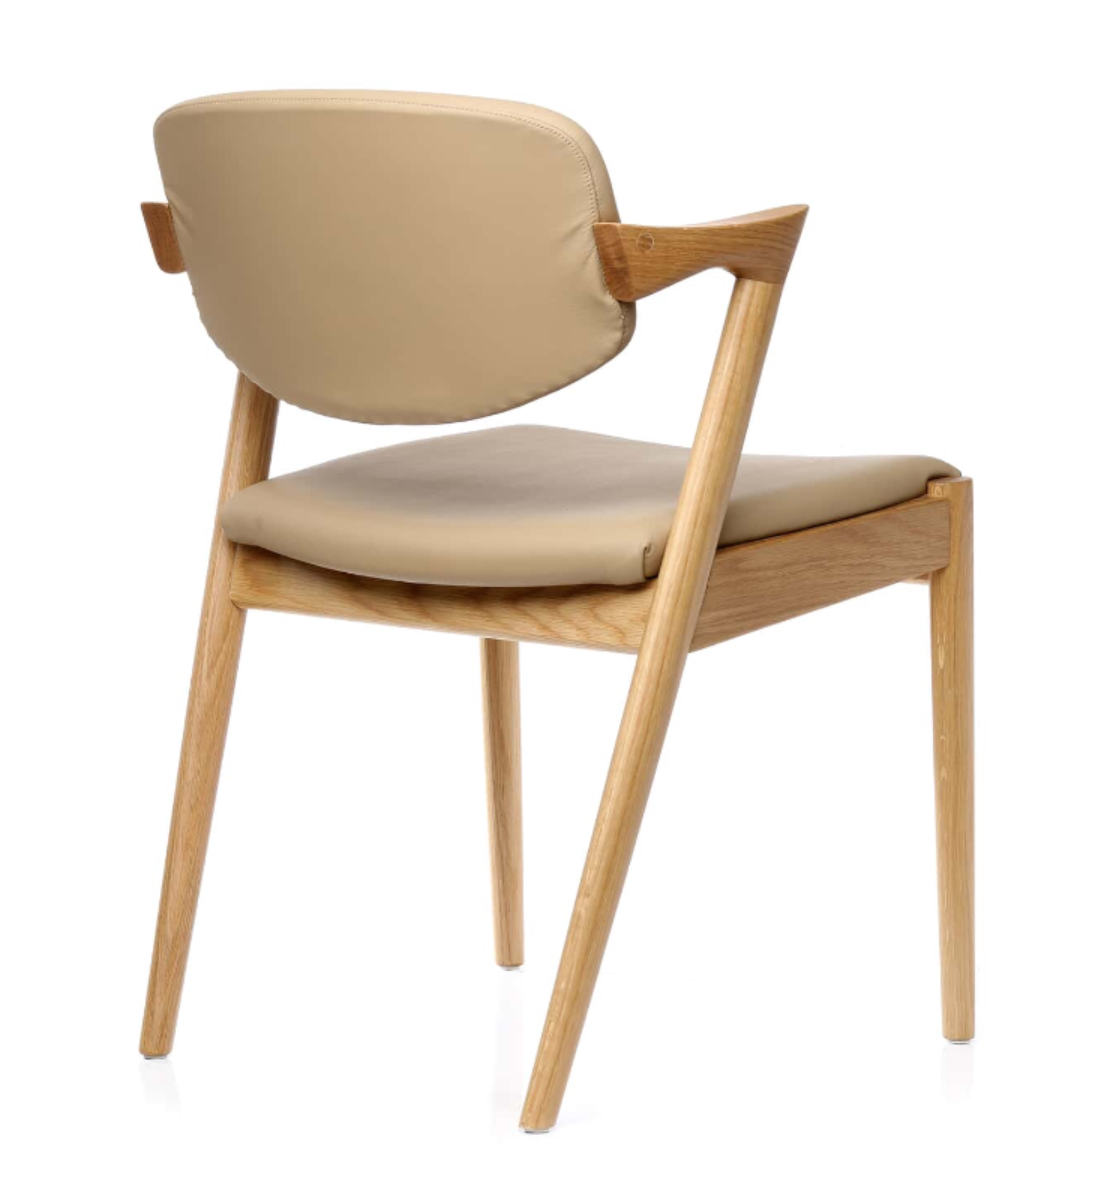 Kai Kristiansen designer replica chair in Leather Fabric